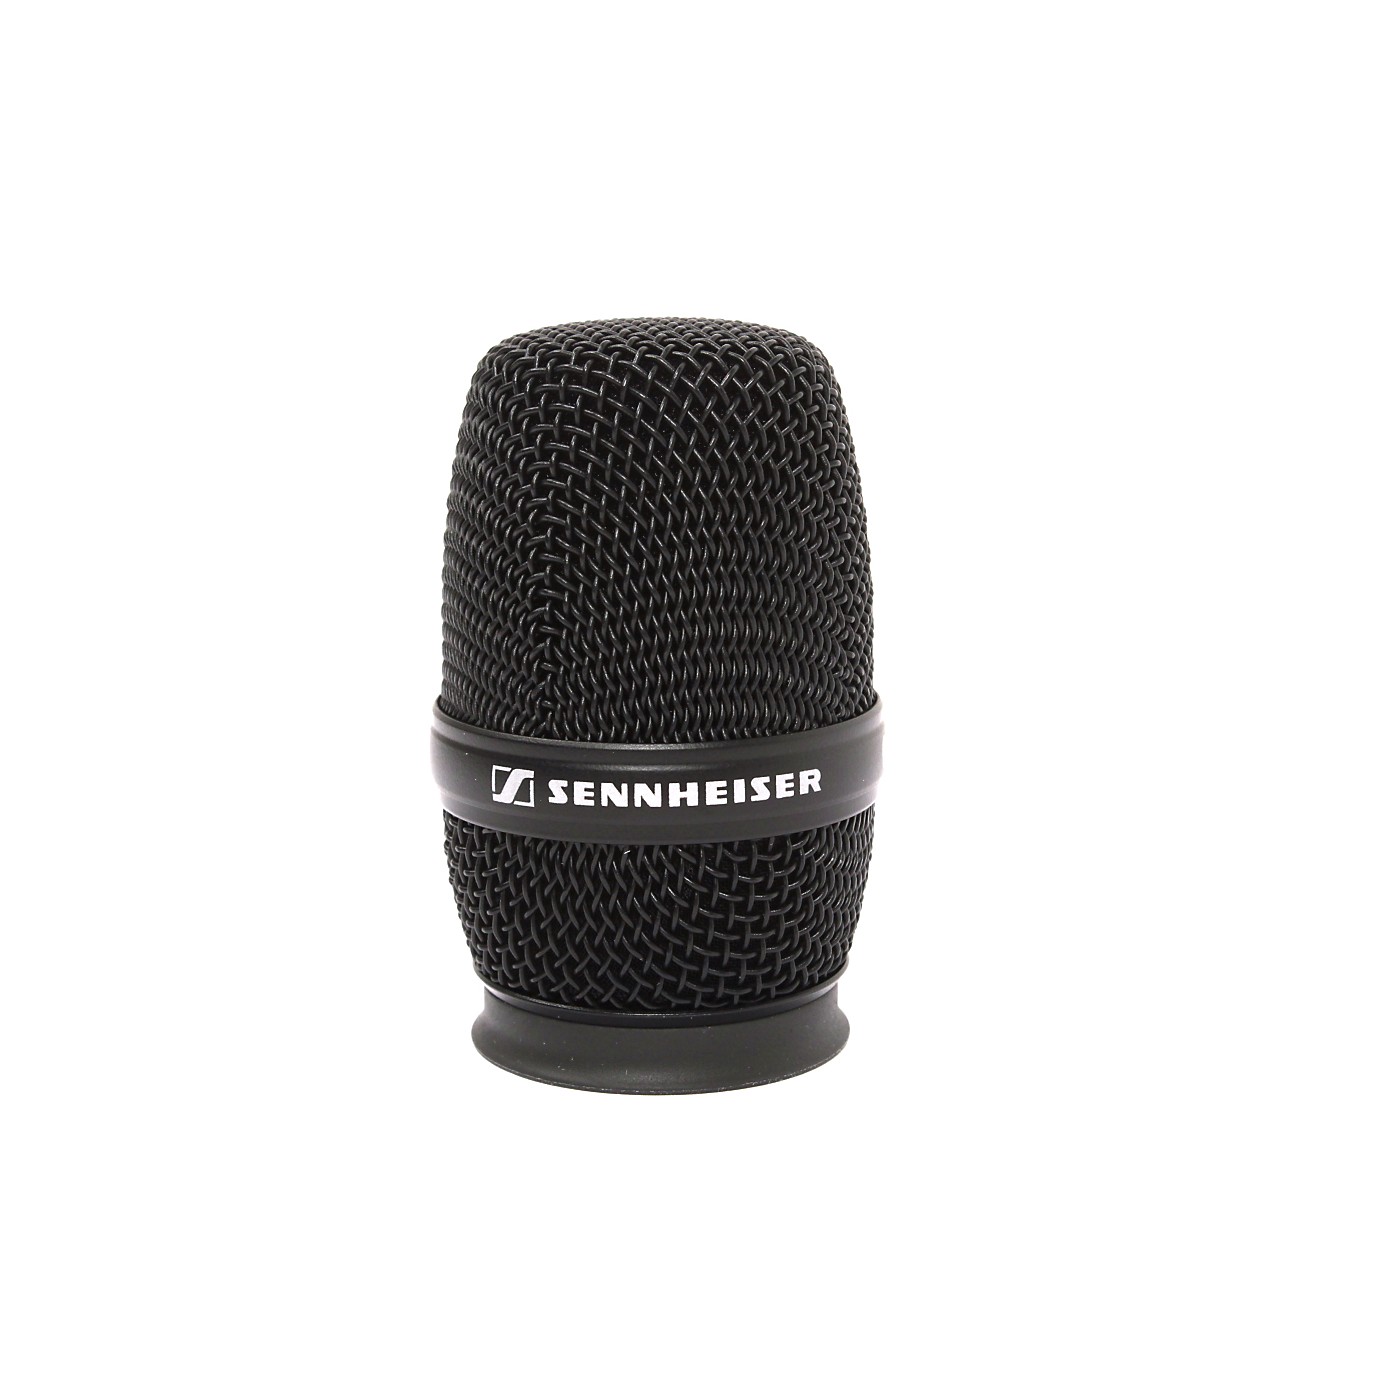 Sennheiser MMD 845-1 e845 Wireless Microphone Capsule thumbnail